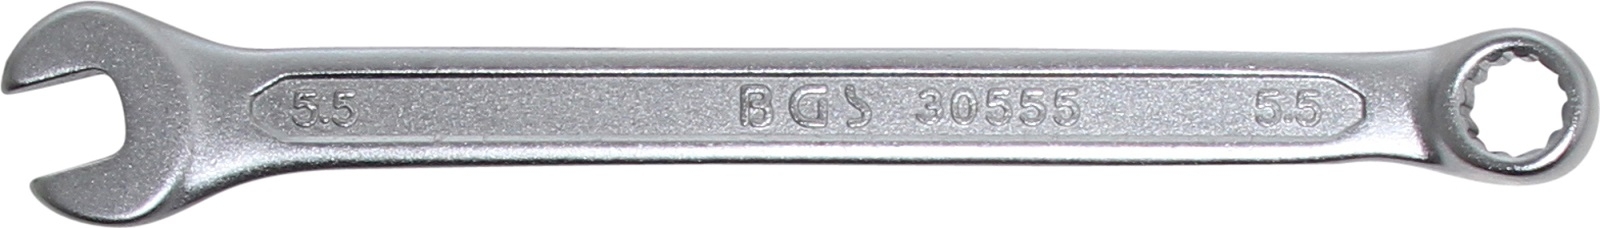 Maul-Ringschlüssel | SW 5,5 mm - BGS 30555